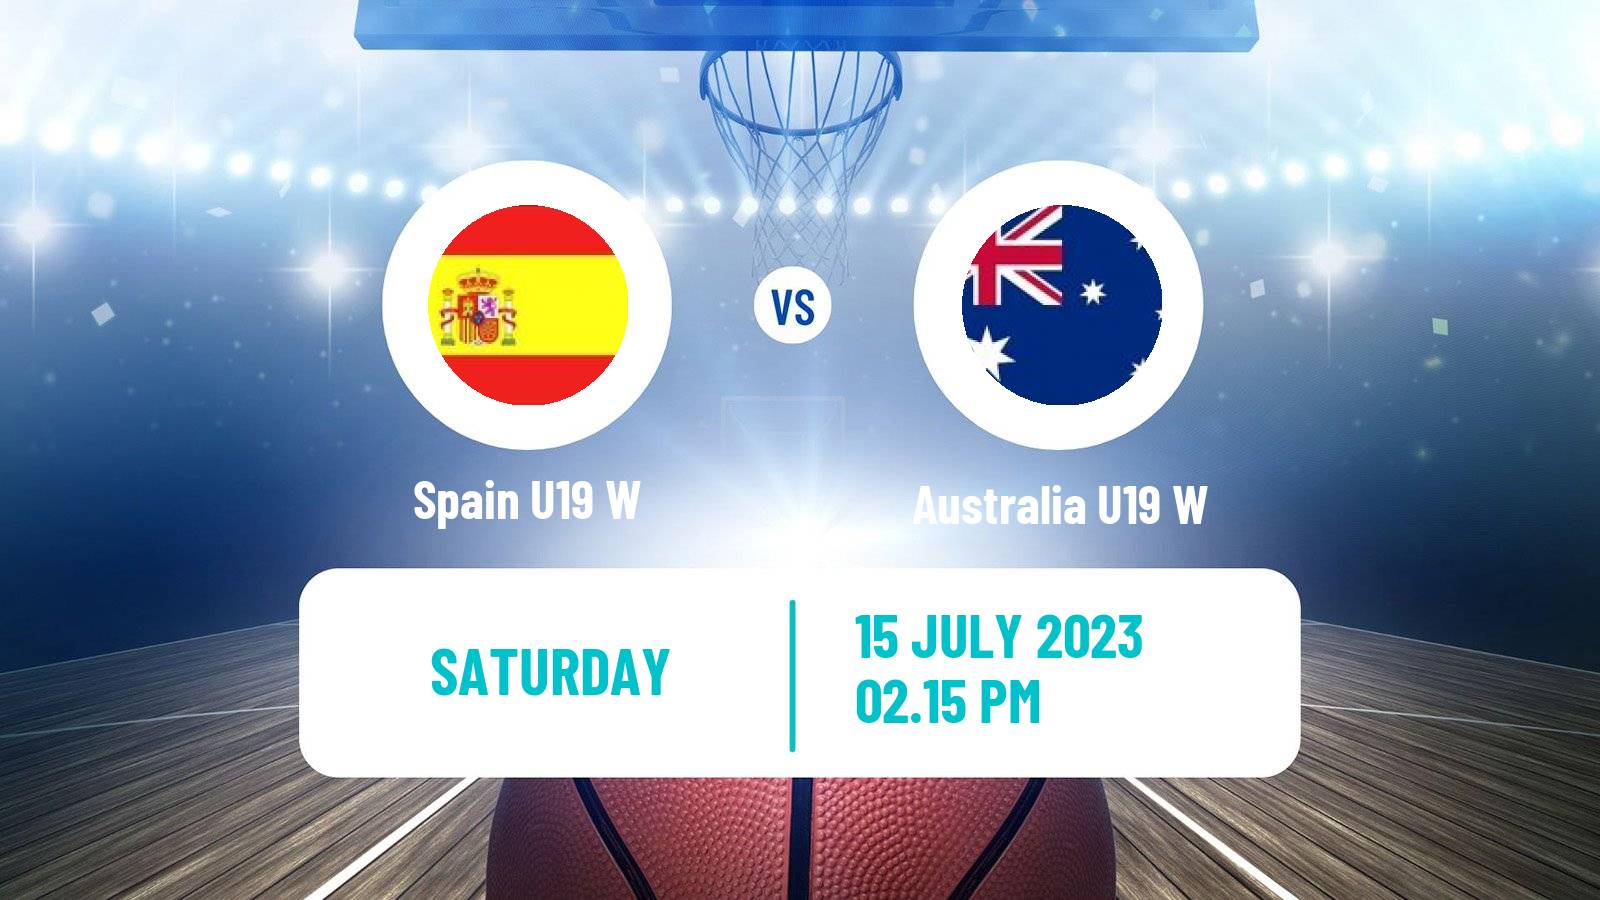 Basketball World Championship U19 Basketball Women Spain U19 W - Australia U19 W